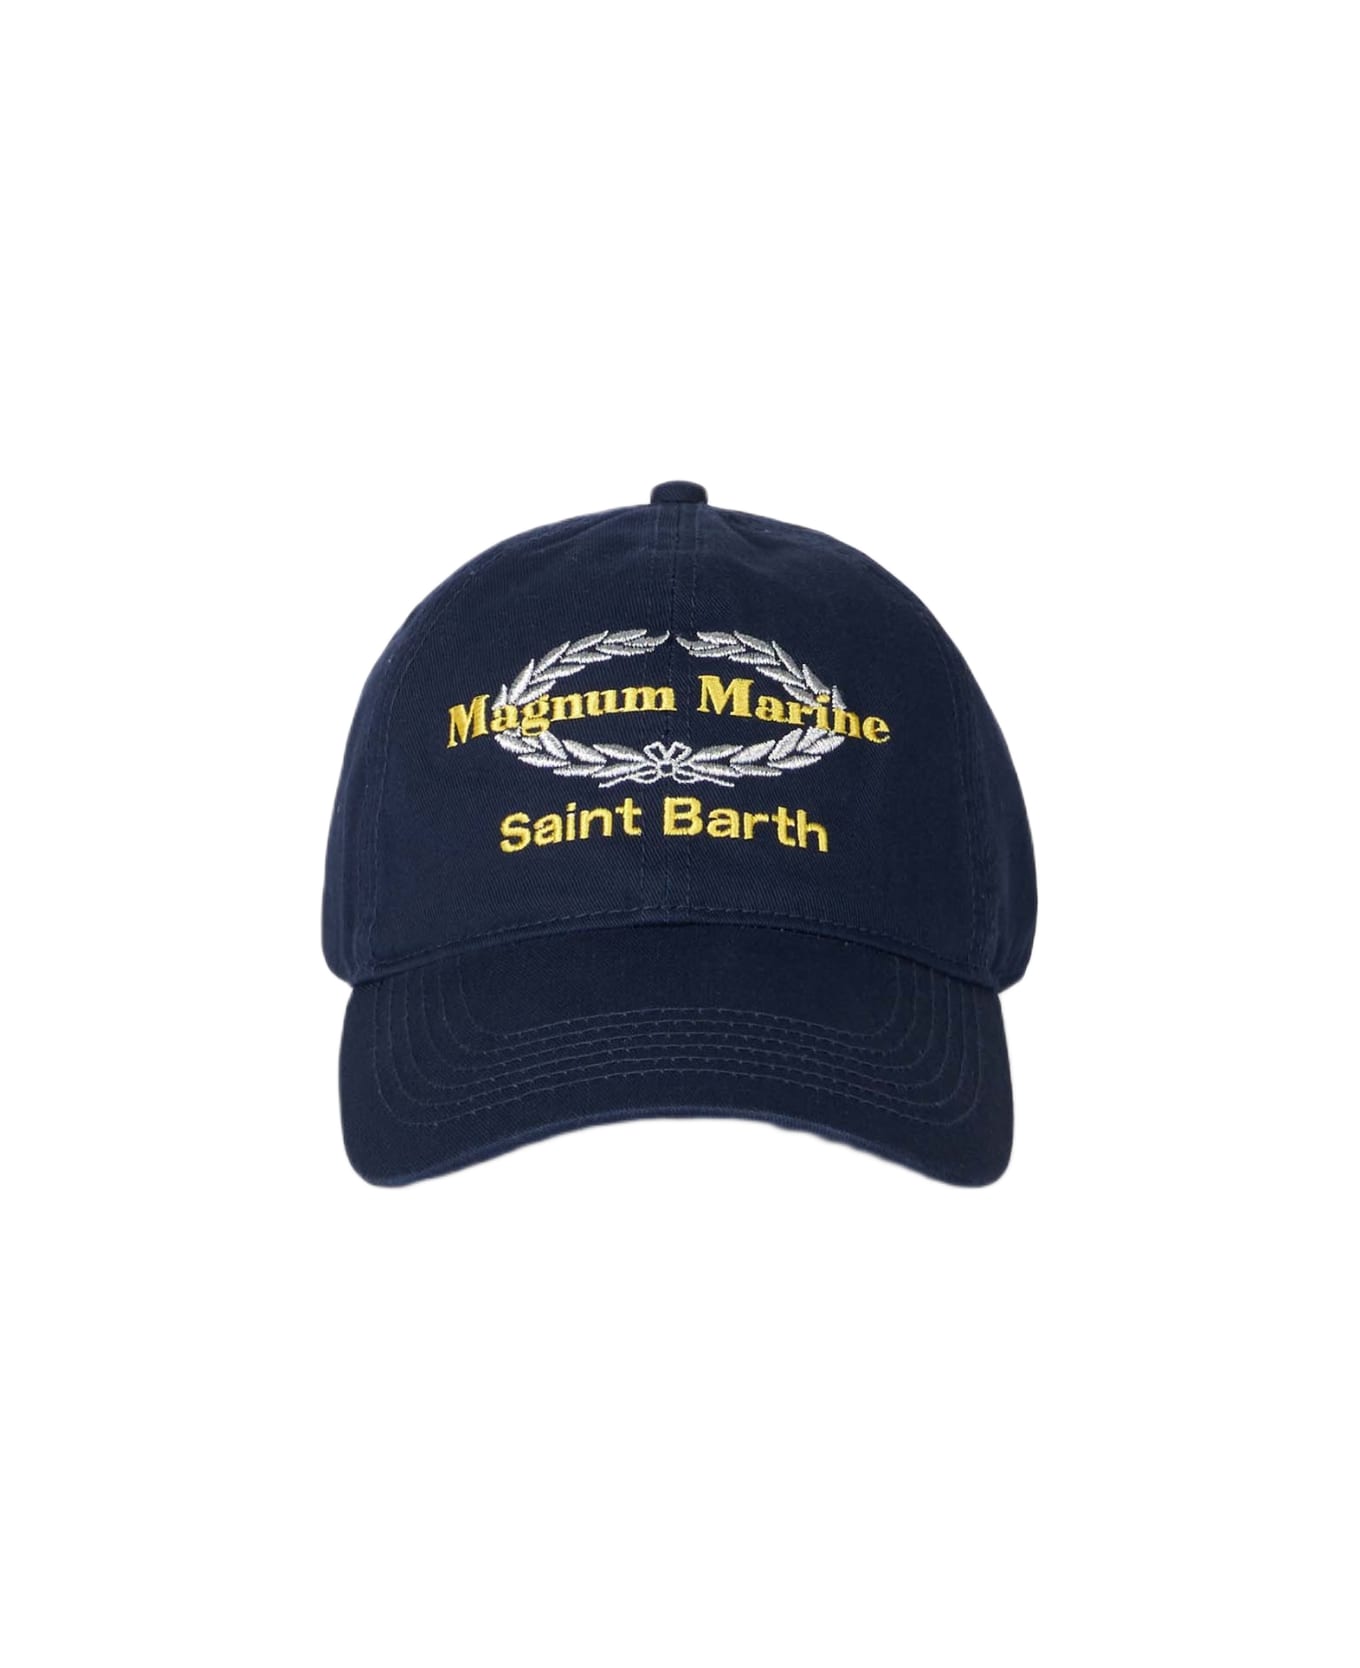 MC2 Saint Barth Baseball Cap With Magnum Marine Embroidery | Magnum Marine Special Edition - BLUE